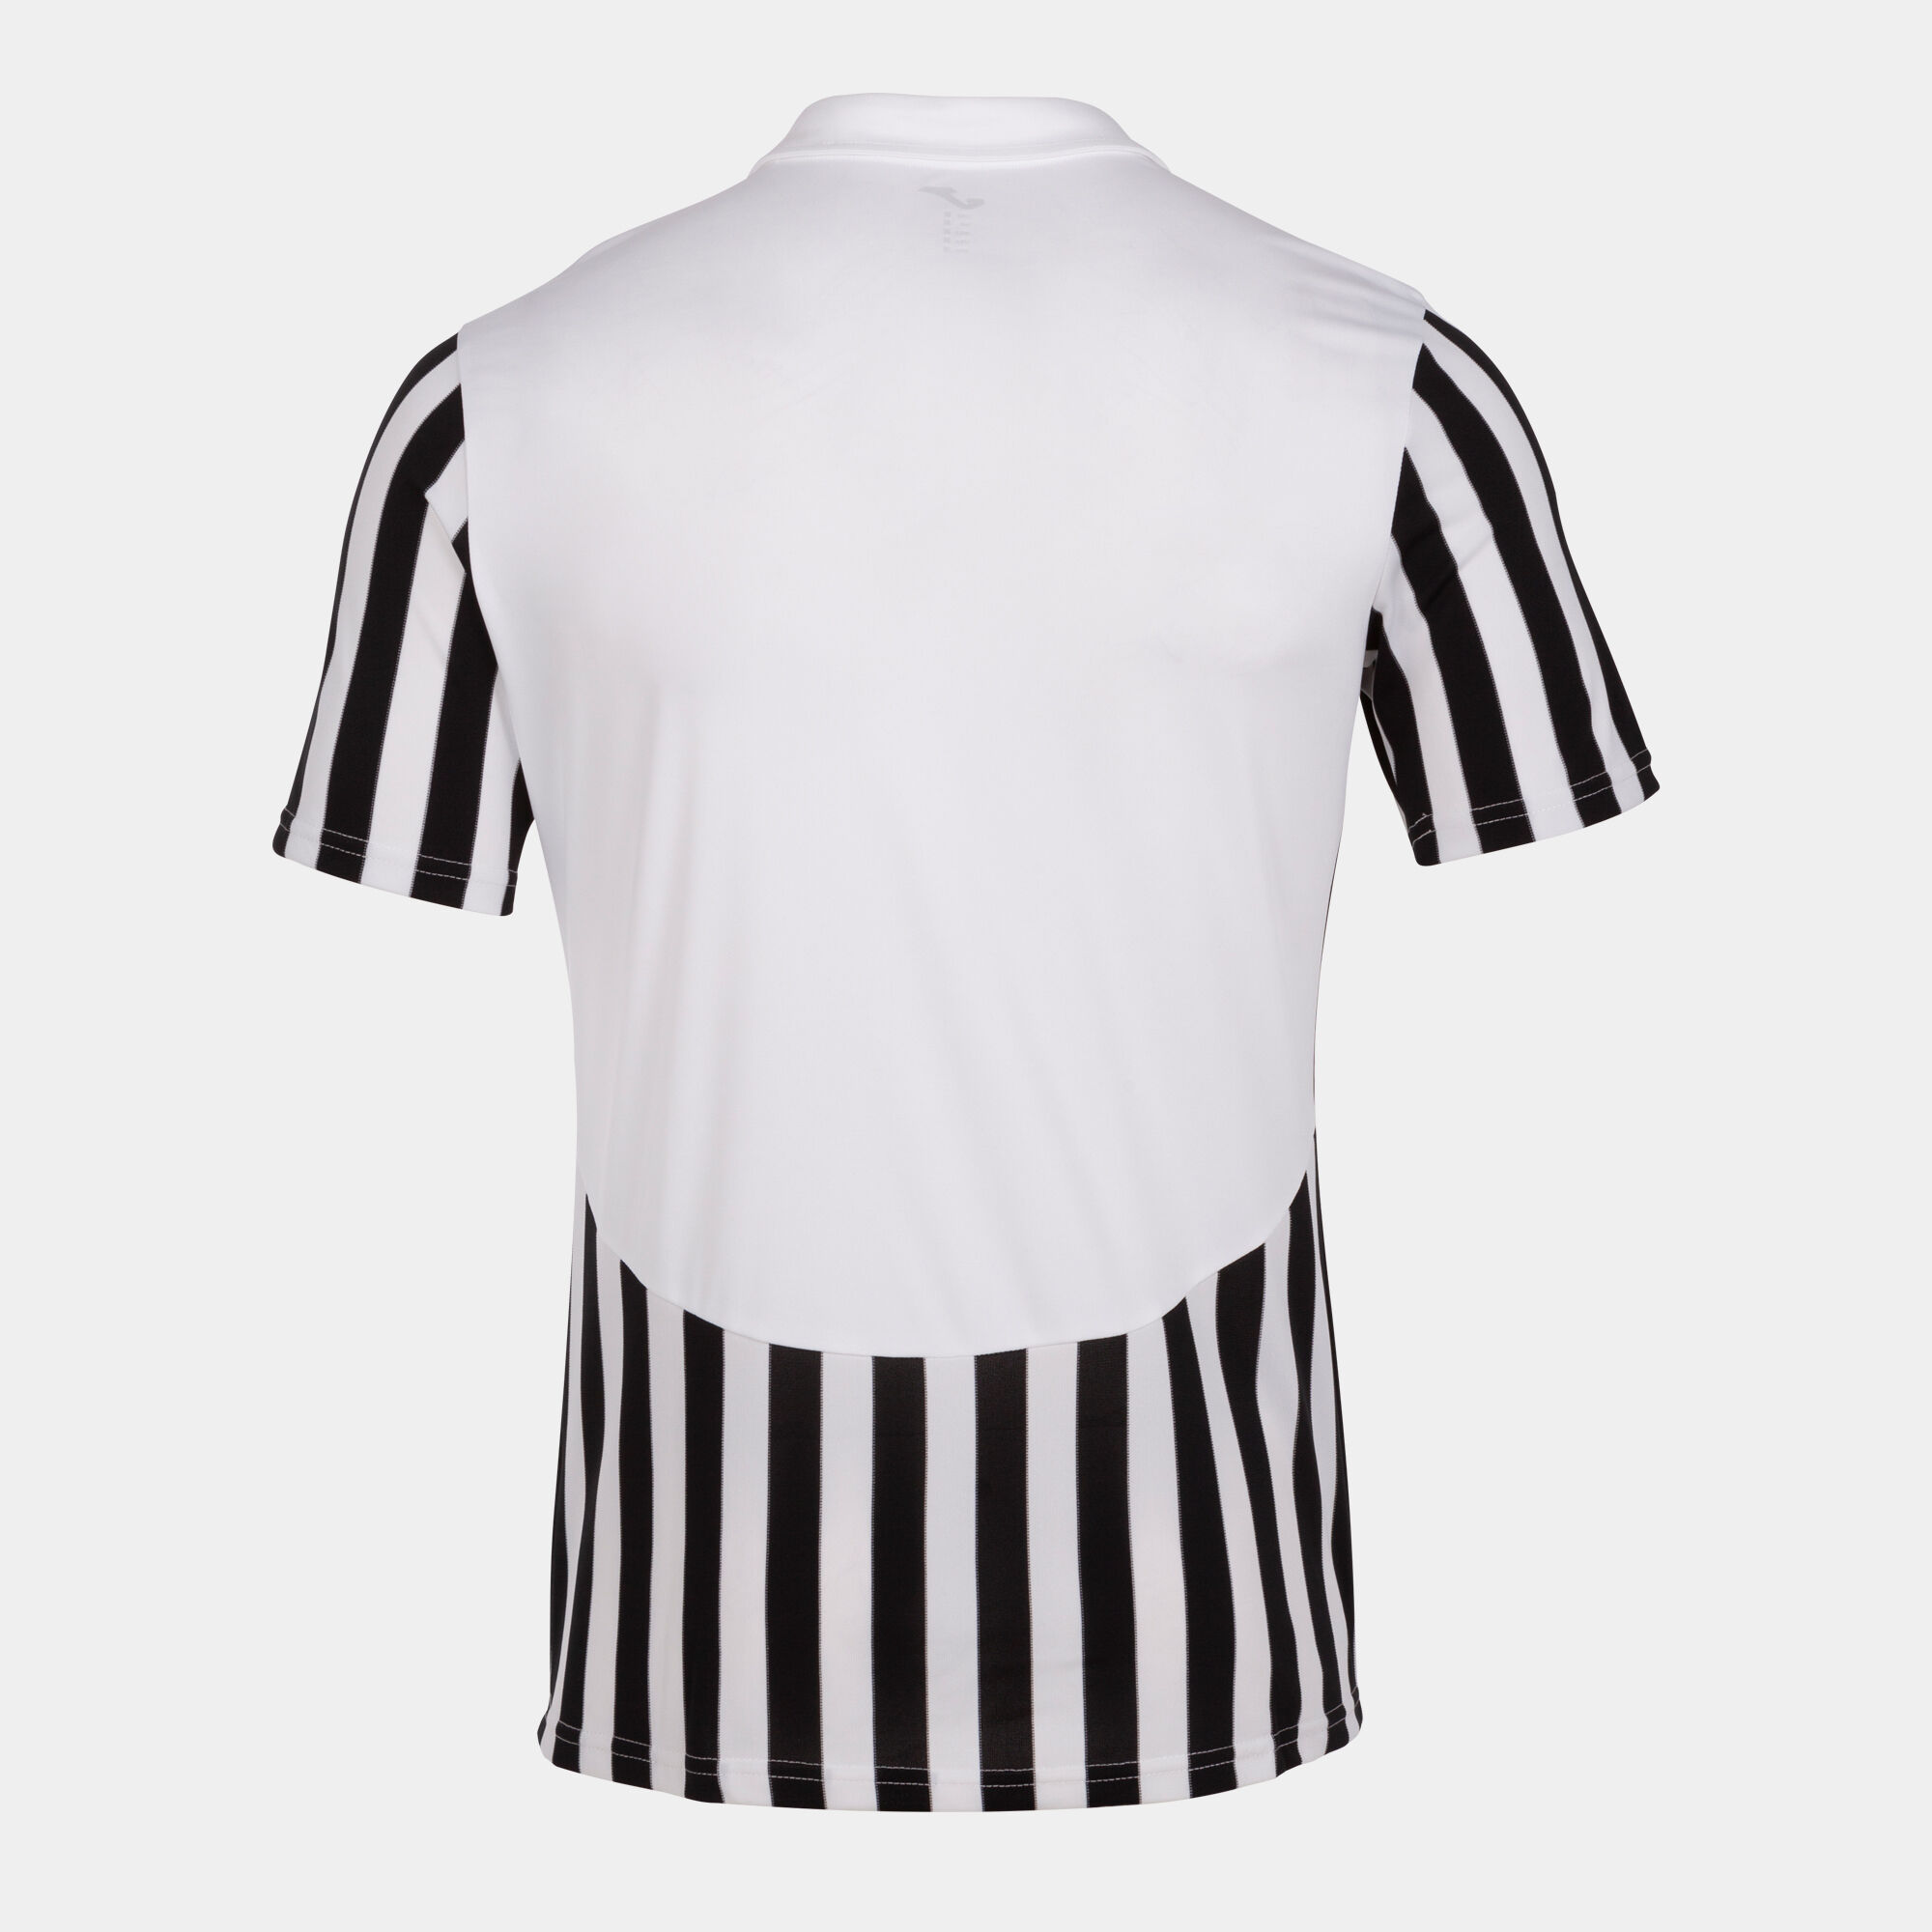 Camiseta manga corta hombre Copa II blanco negro